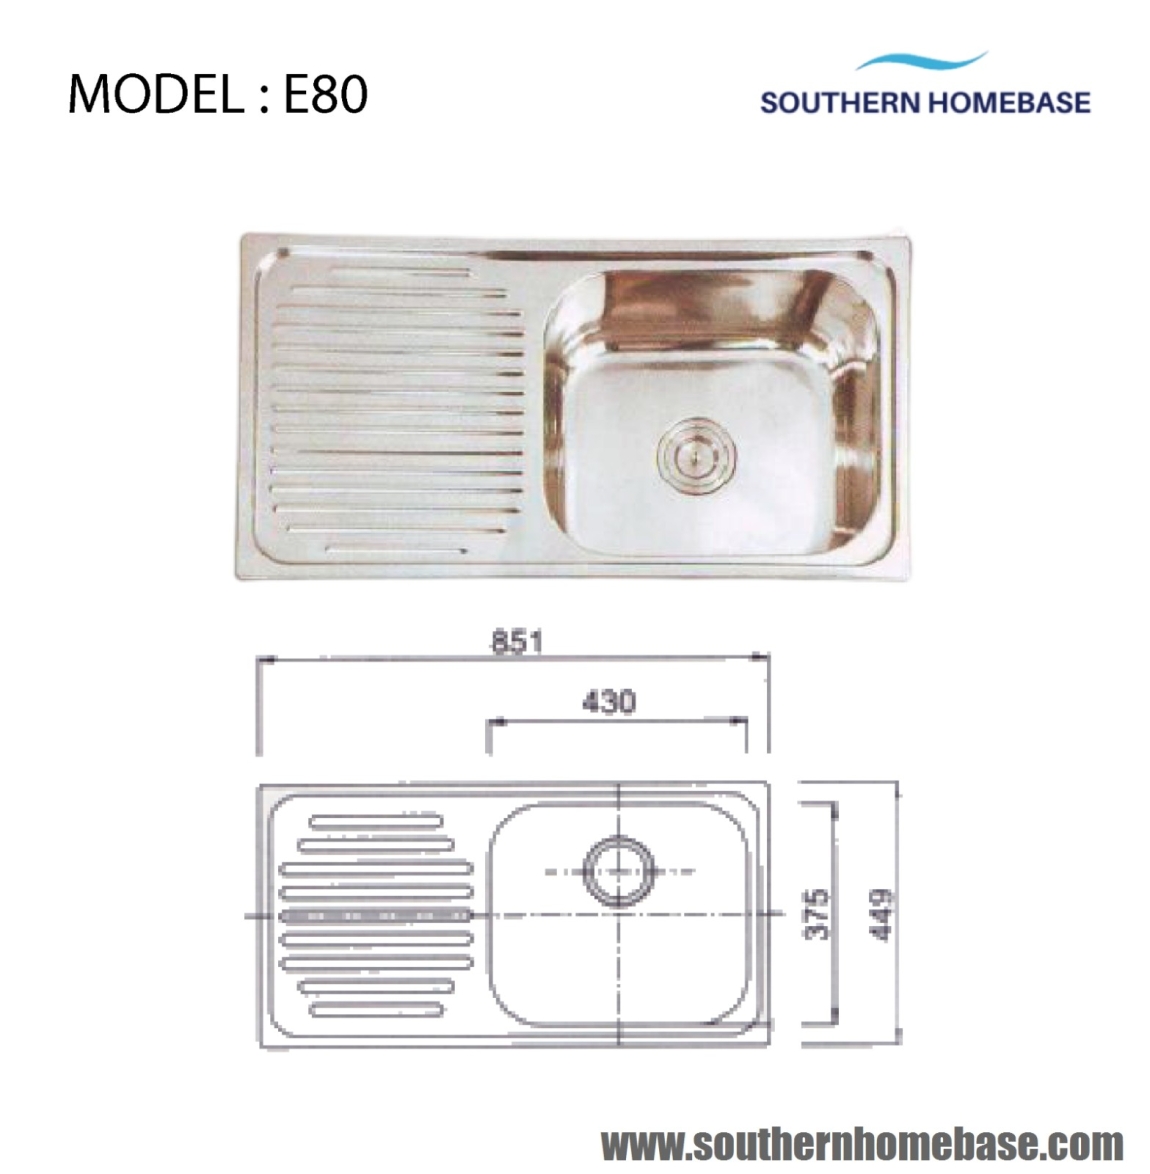 SINKI DAPUR 1 MANGKUK DENGAN DRAINER : ELITE E80 ELITE - Sinki Mangkuk Tunggal Keluli Tahan Karat Sinki Dapur Carta Pilihan Warna Corak